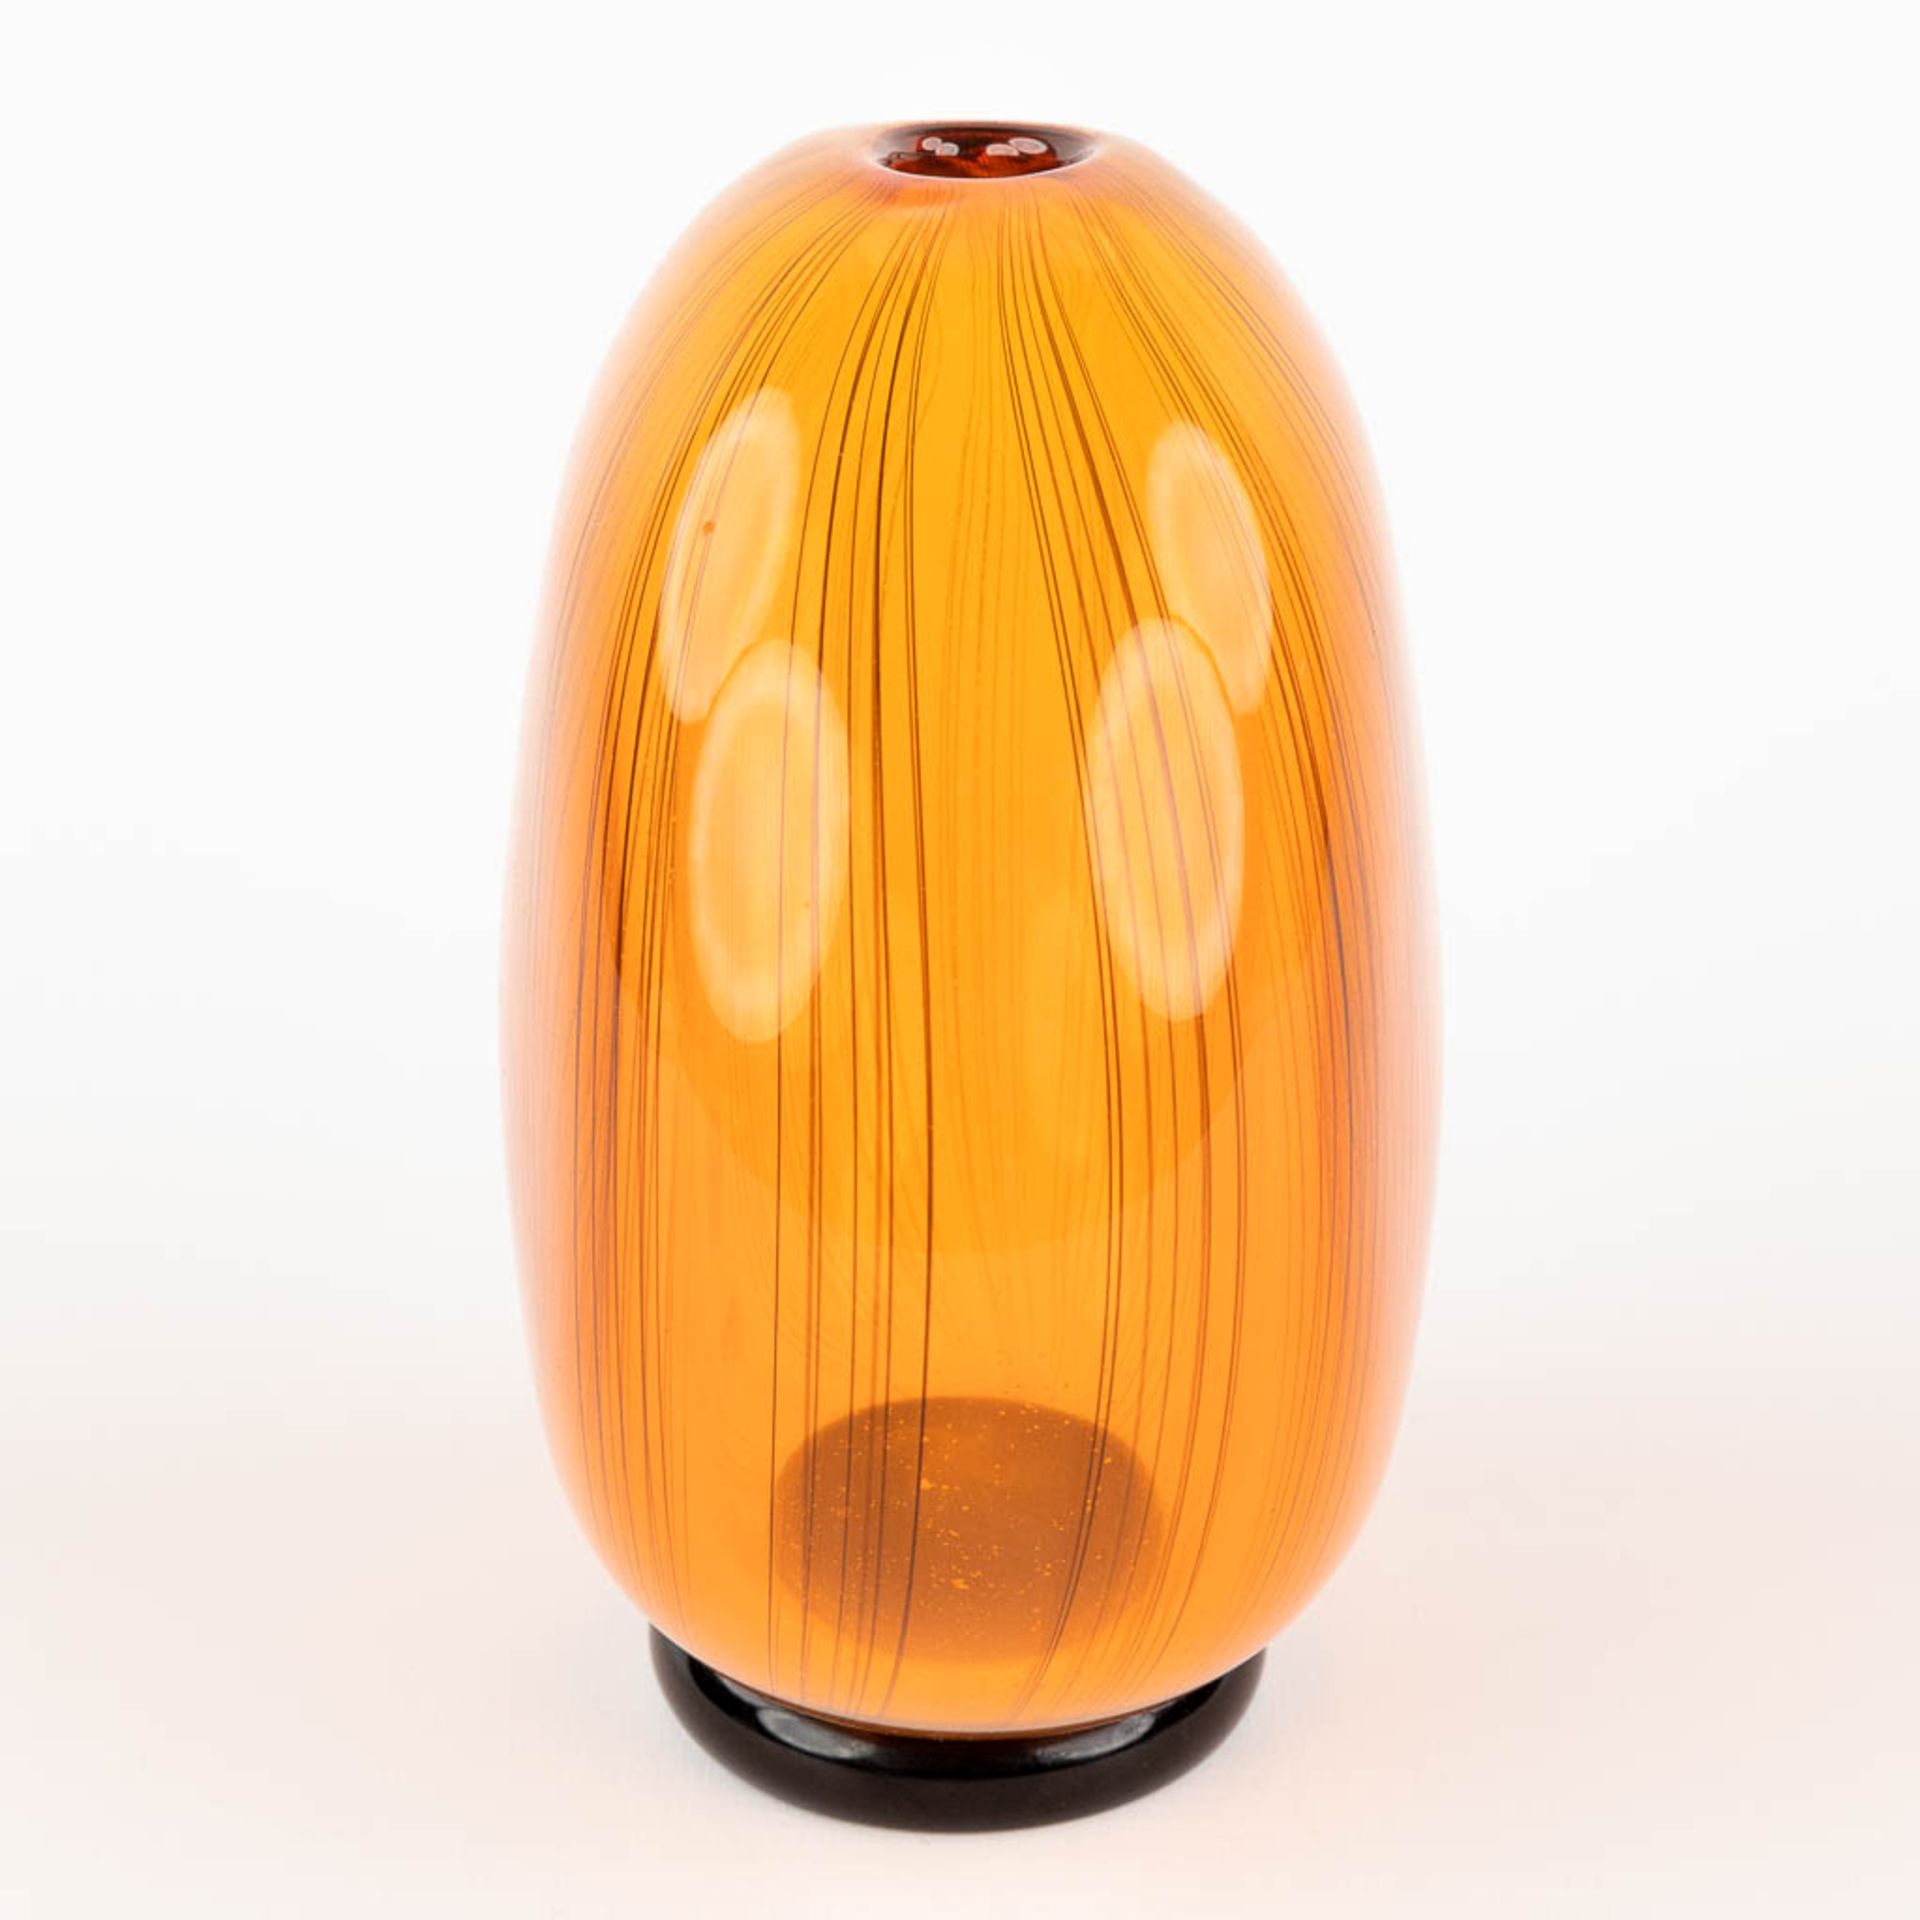 Seguso Viro, Murano, an orange glass vase. (D:8 x W:15 x H:16 cm) - Image 6 of 10